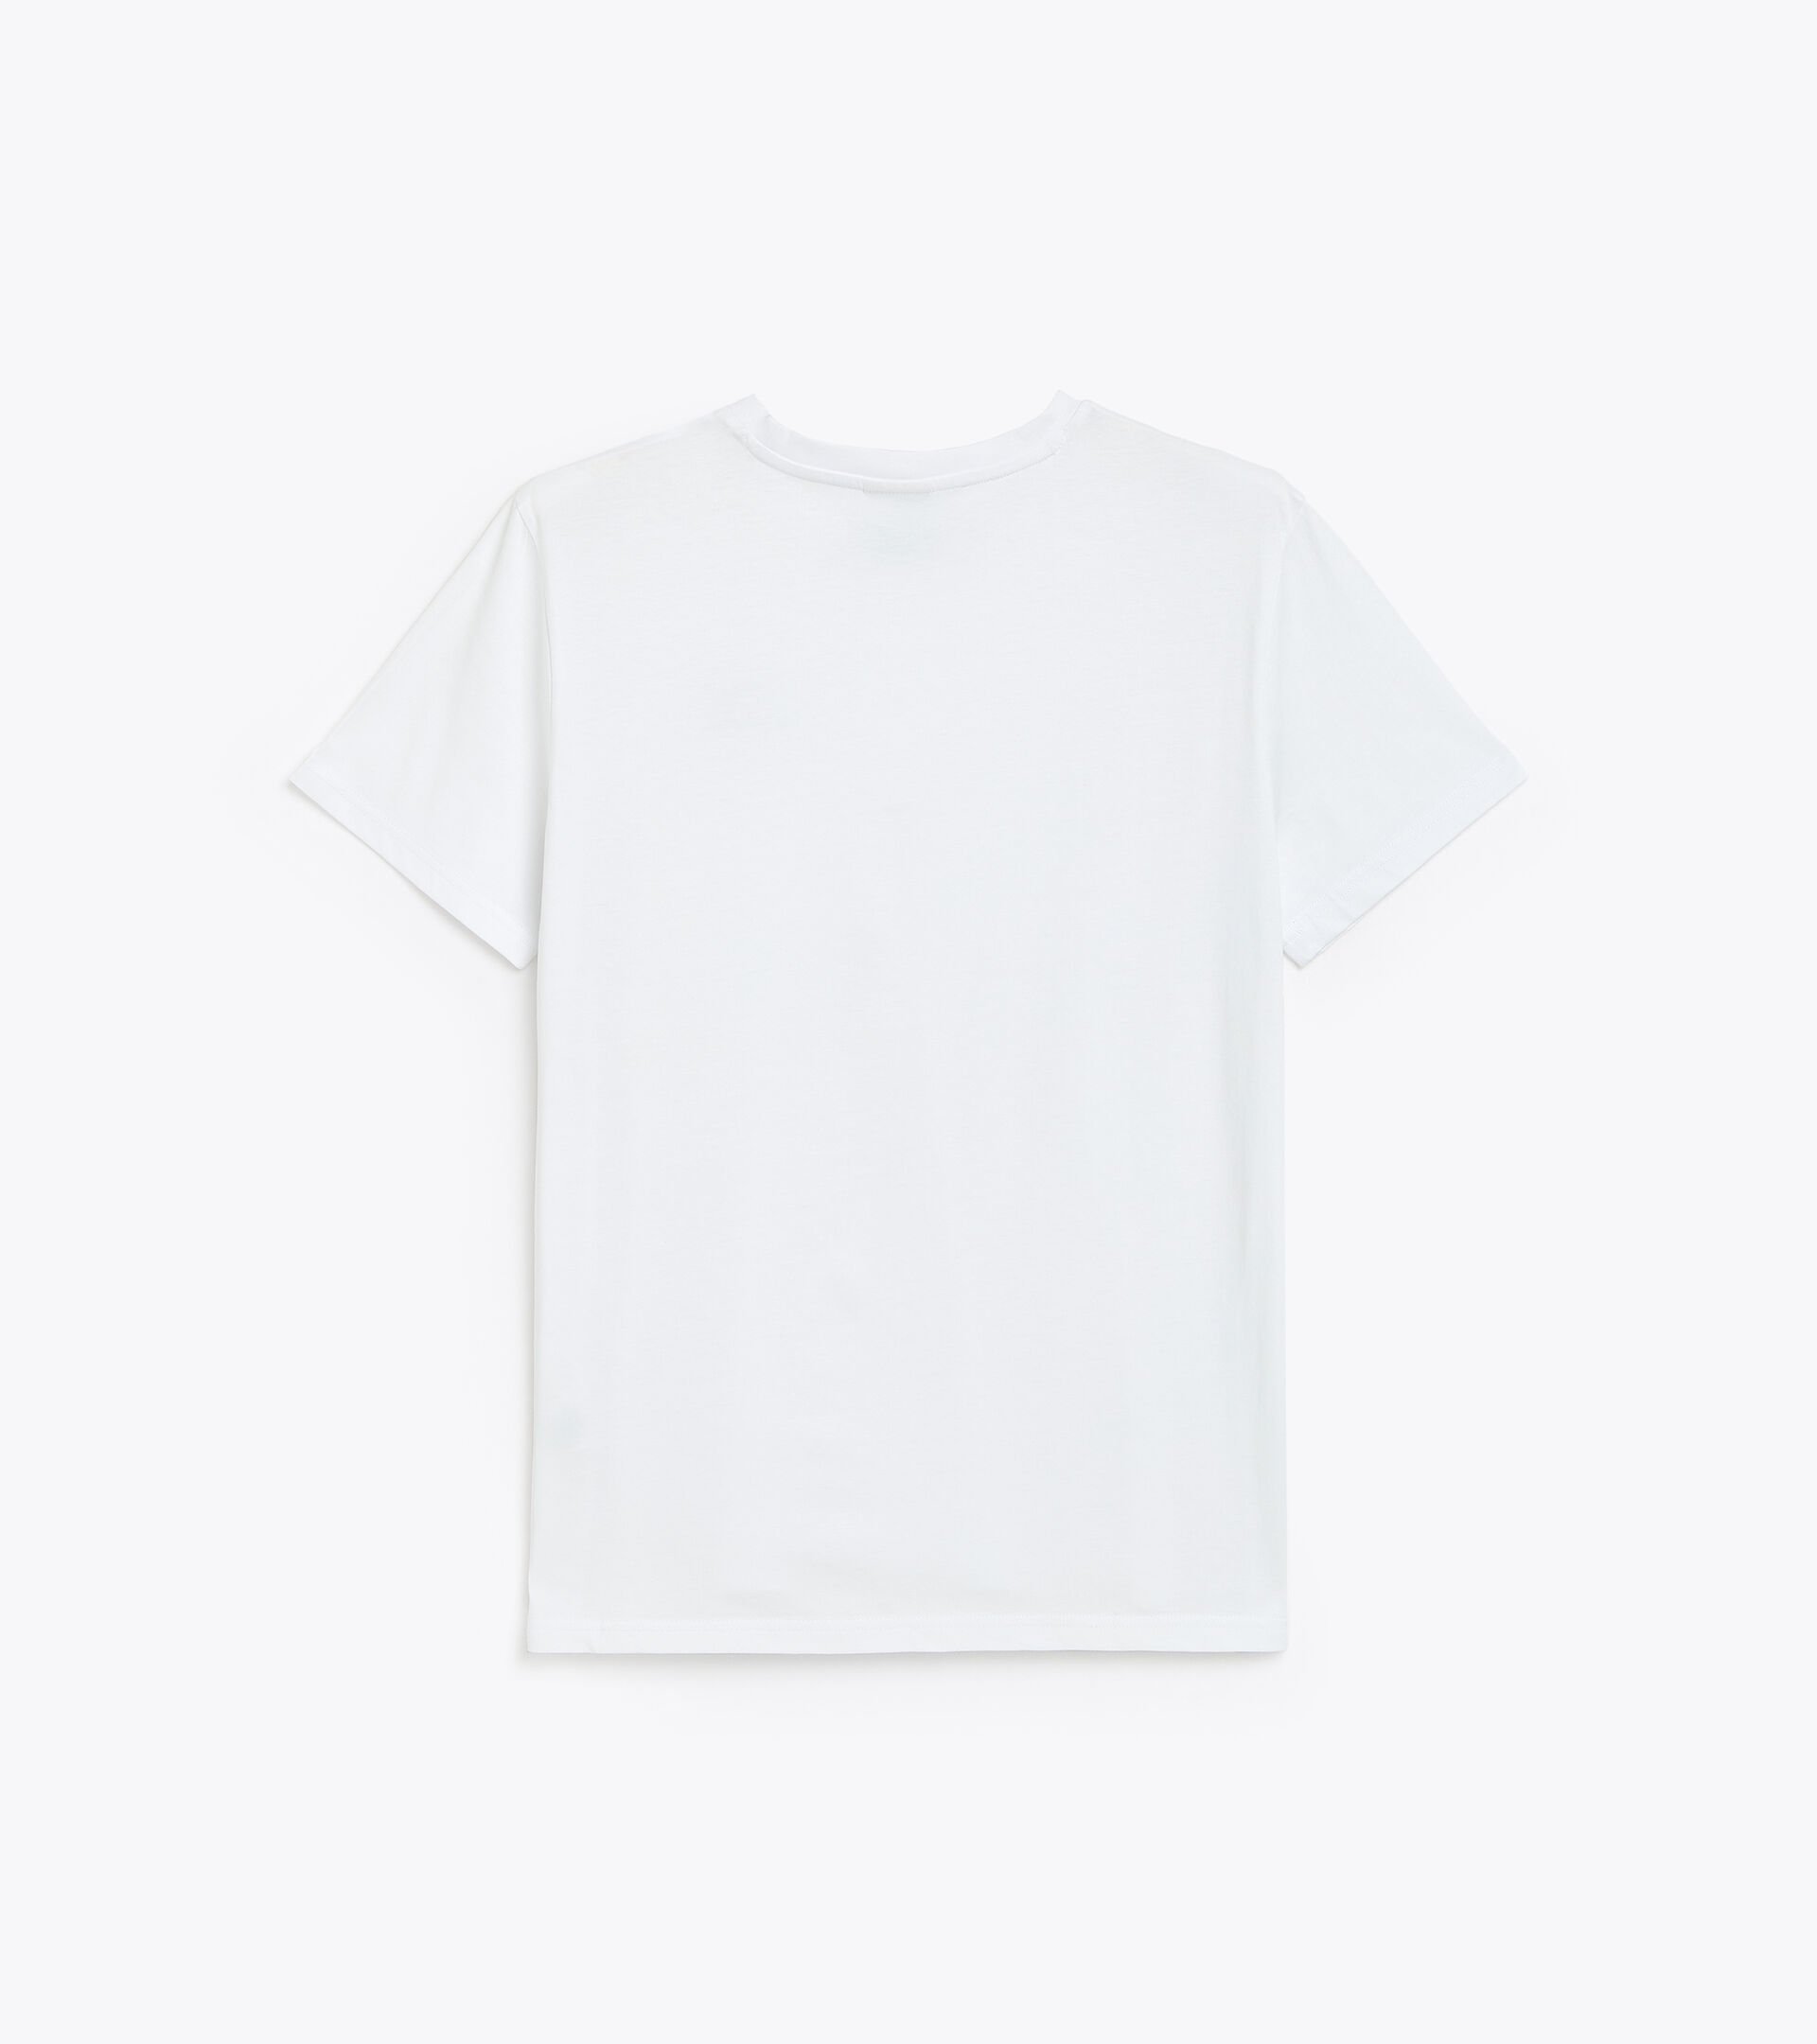 Camiseta deportiva - Hombre T-SHIRT SS CORE BLANCO VIVO - Diadora